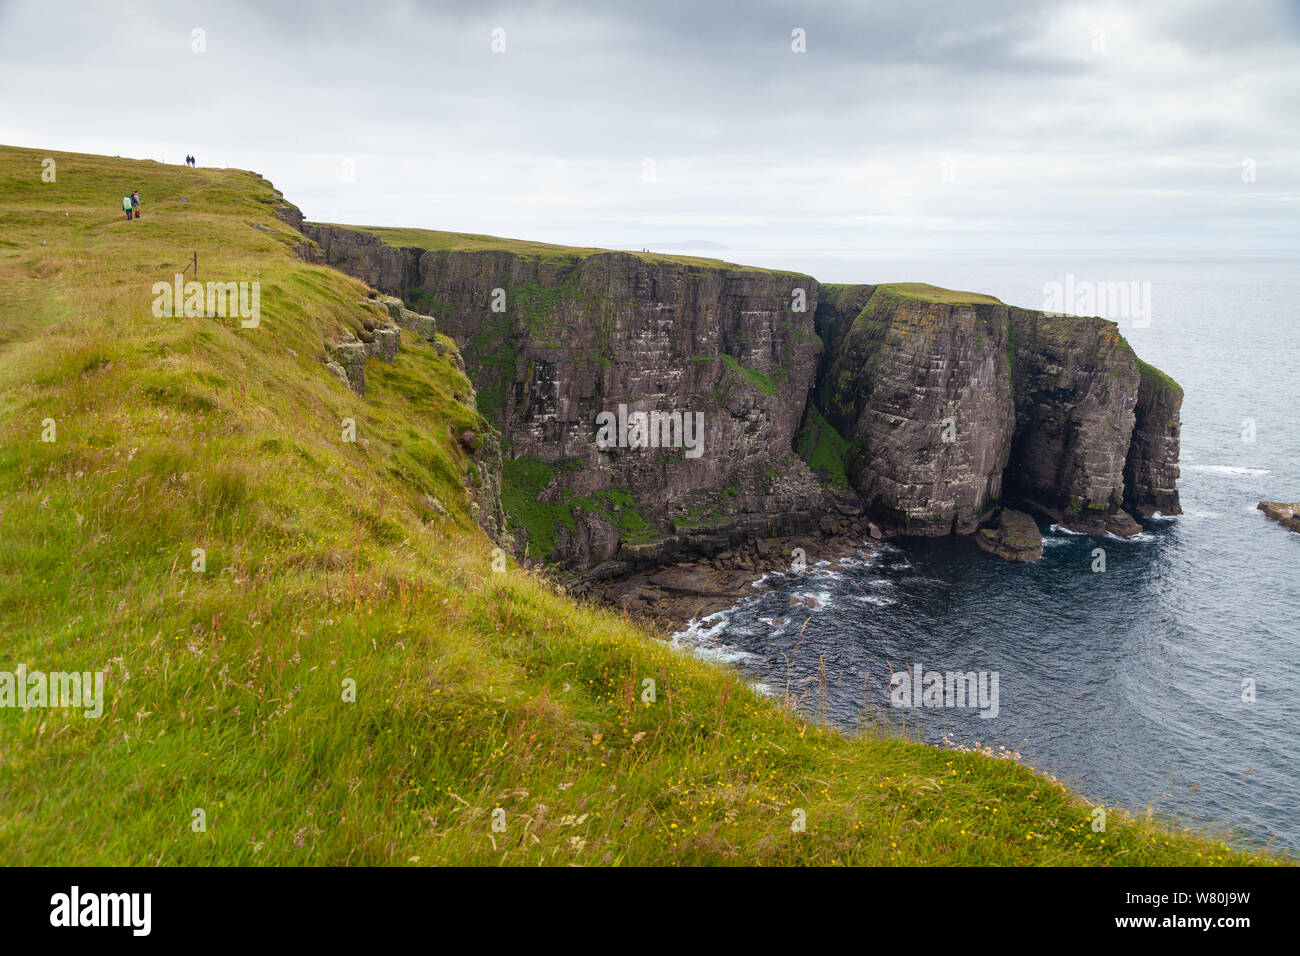 Walkers near the edge of the massive sea cliffs on the isle of Handa Scotland. Stock Photo